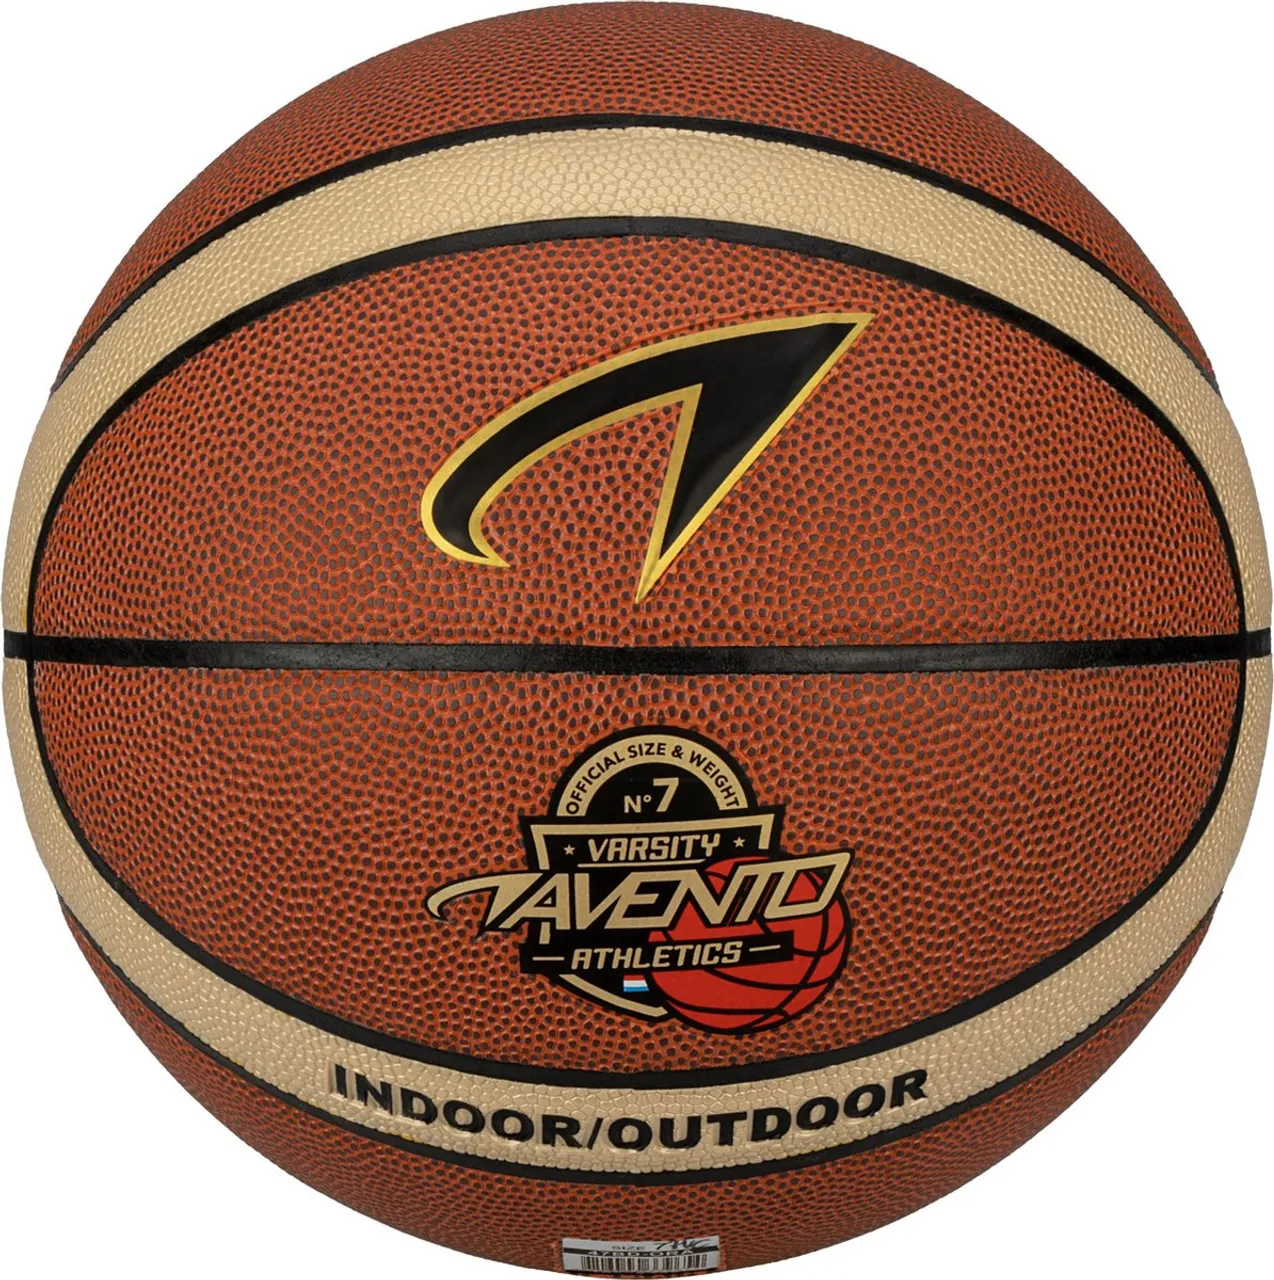 Avento Basketbal Maat 7 - Varsity Athletics - Oranje/zwart